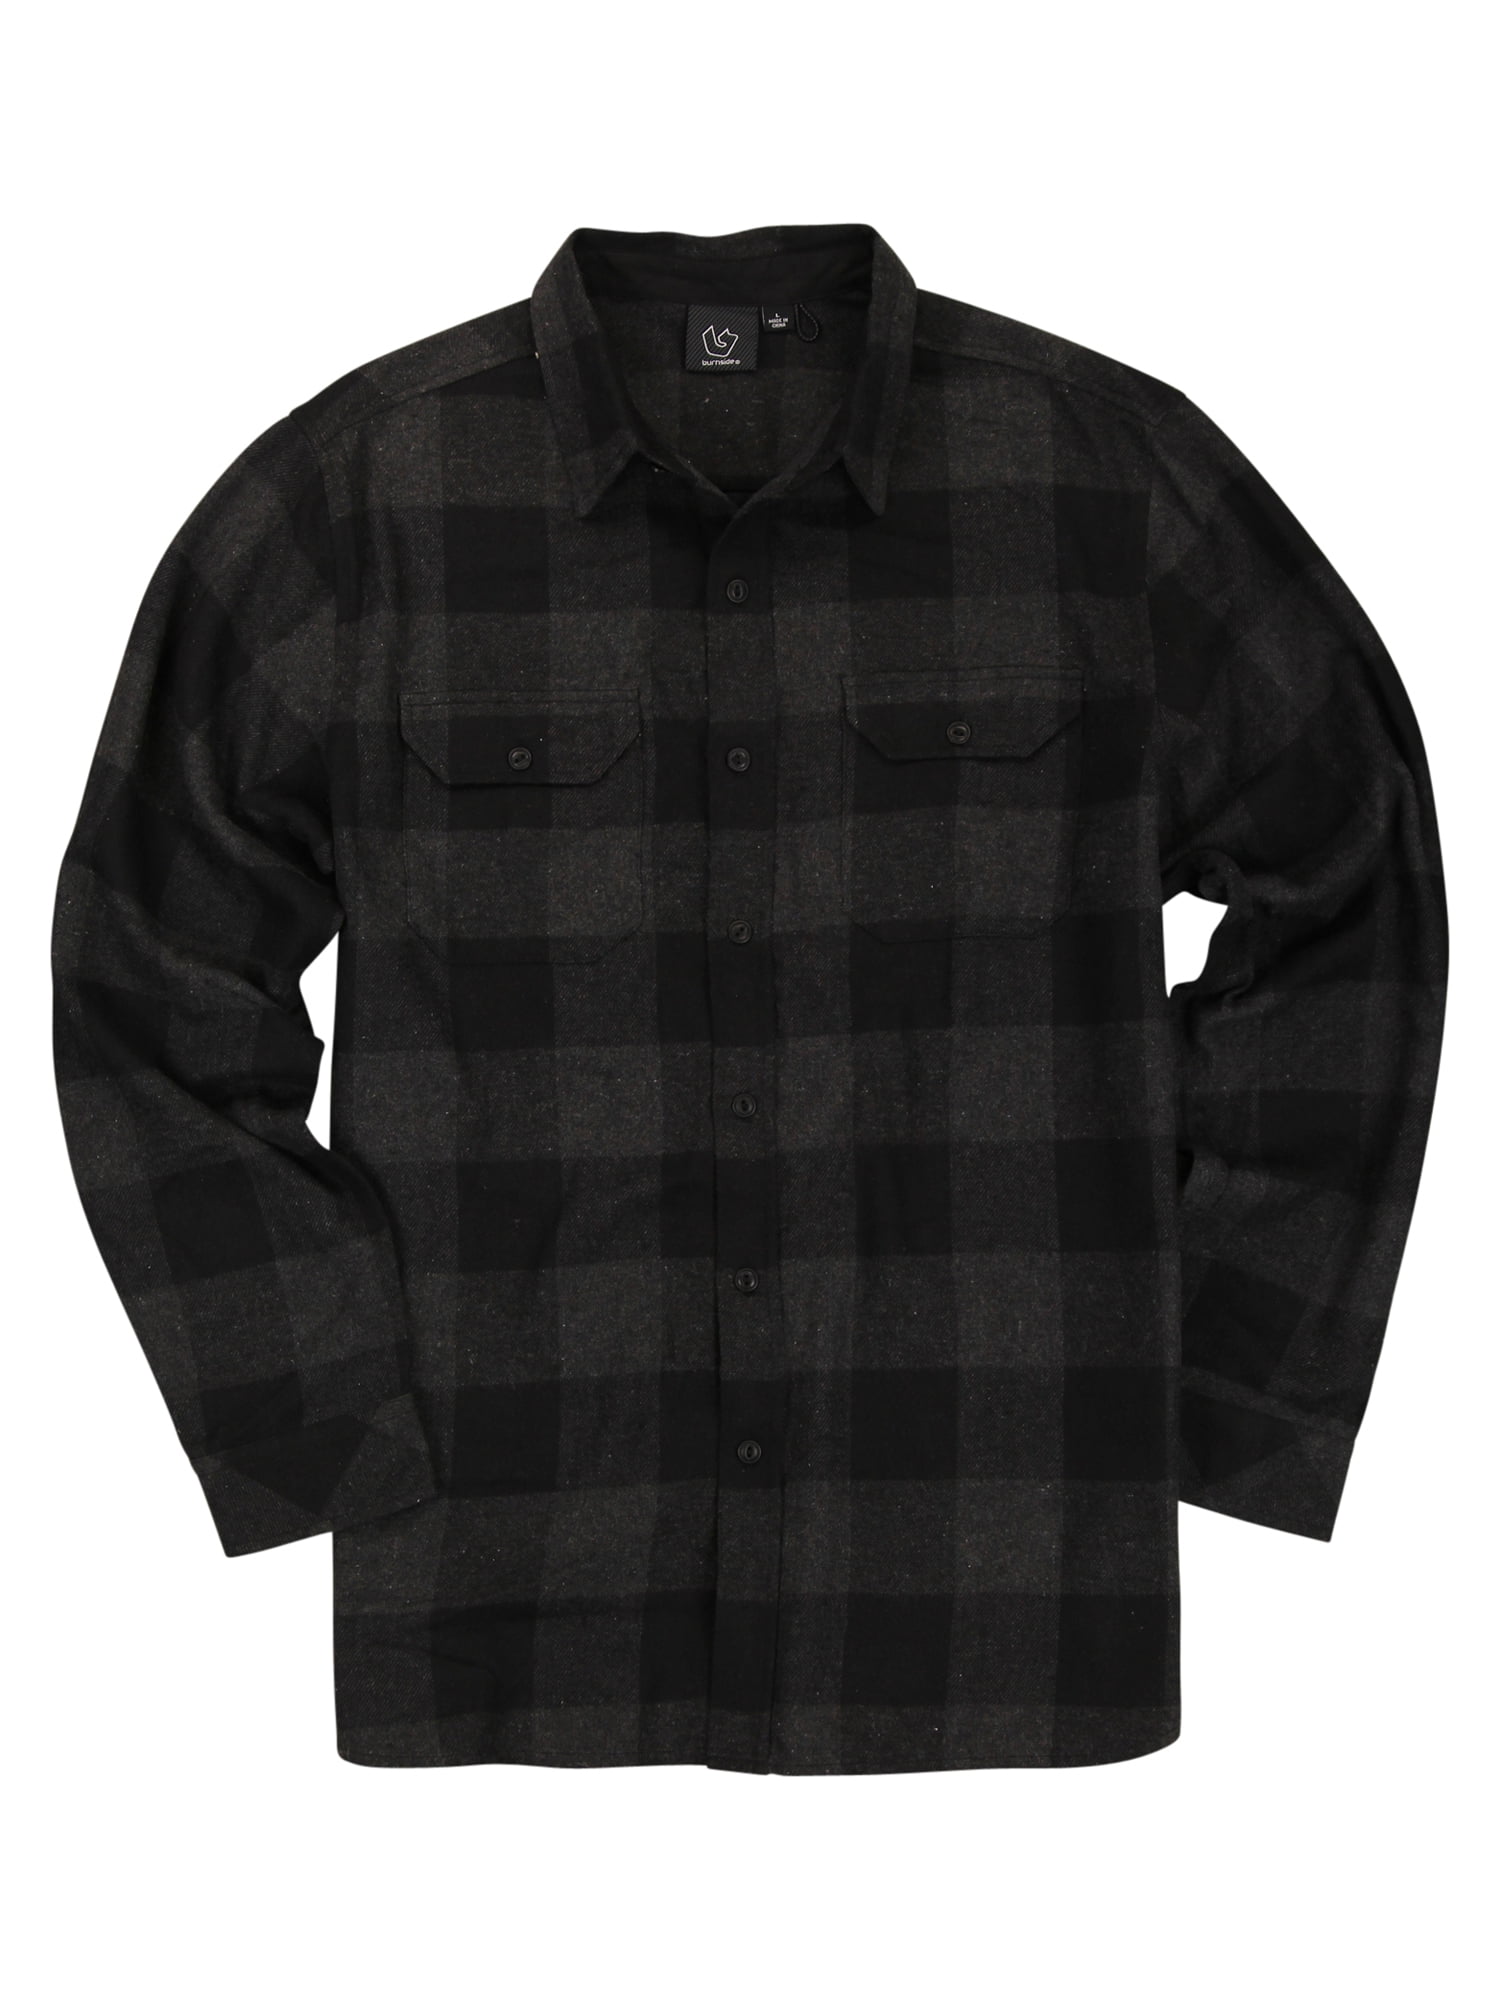 Men's Button Down Long Sleeve Flannel Shirt (Black, Large) (BW8281)